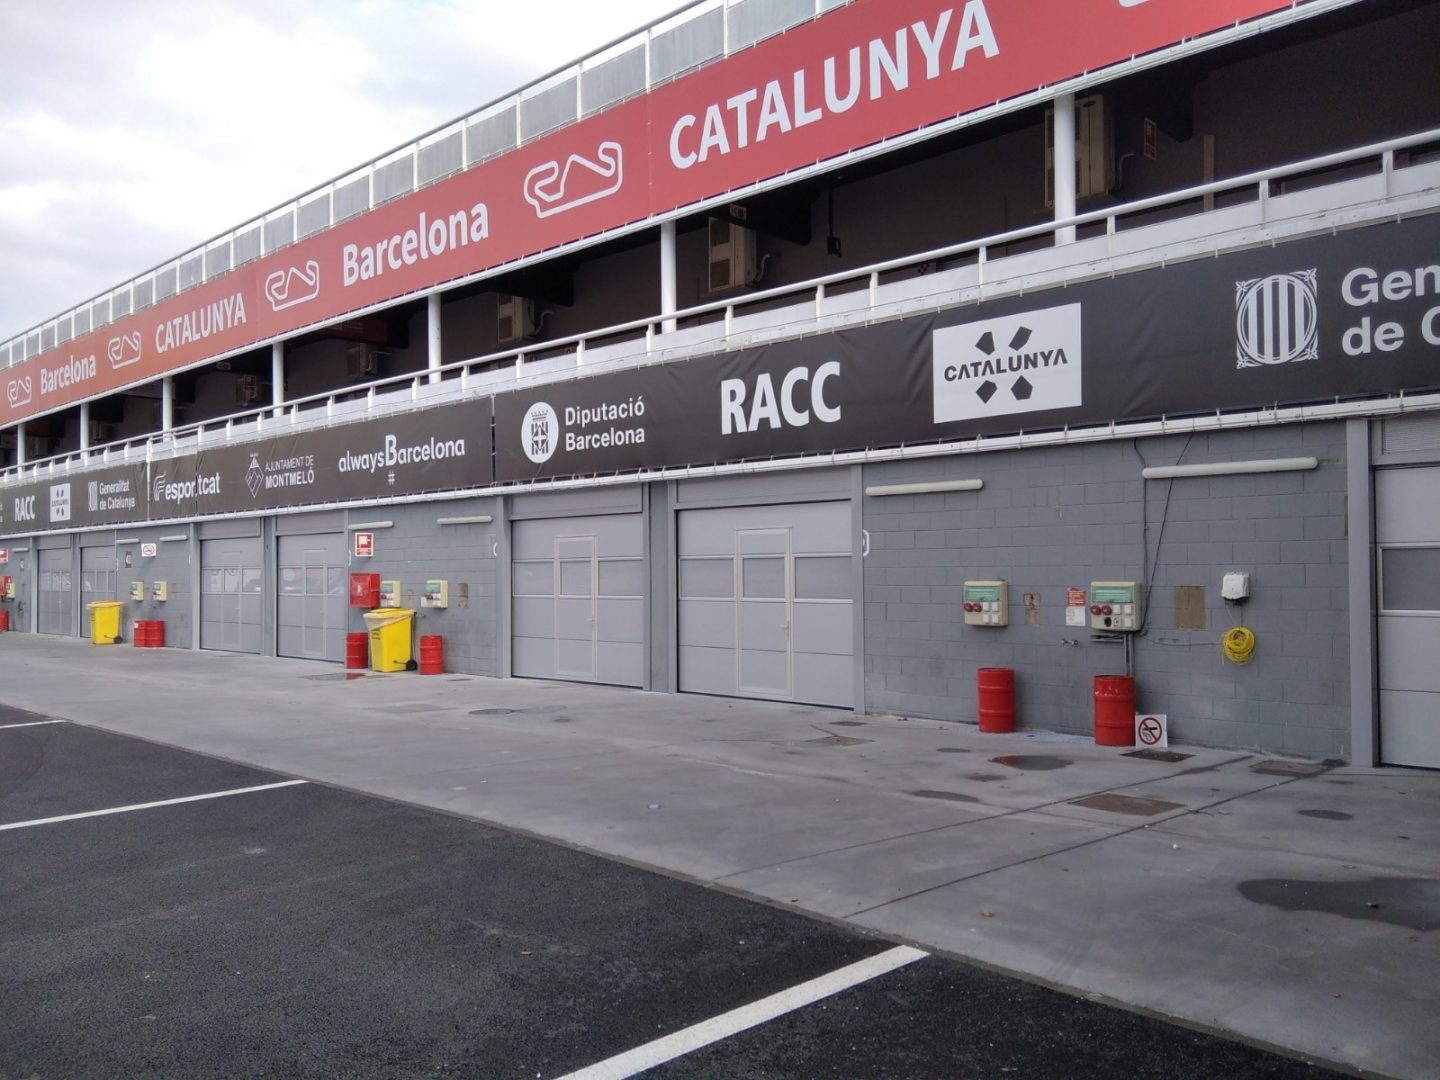 Portoni industriali circuit Barcelona Catalunya - Rolflex